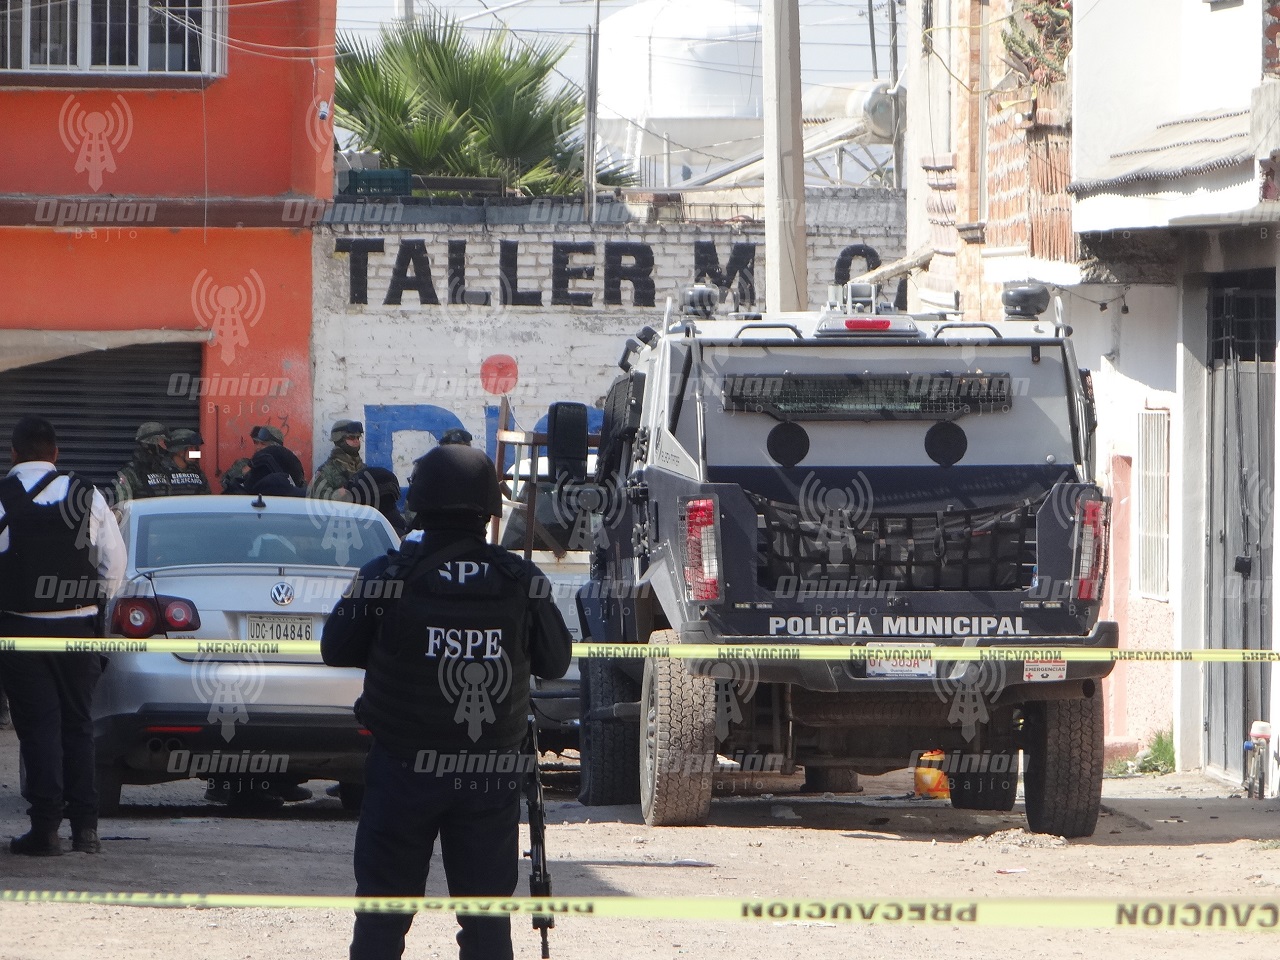 Se enfrentan hombres armados vs Policias Municipales: 1 herido